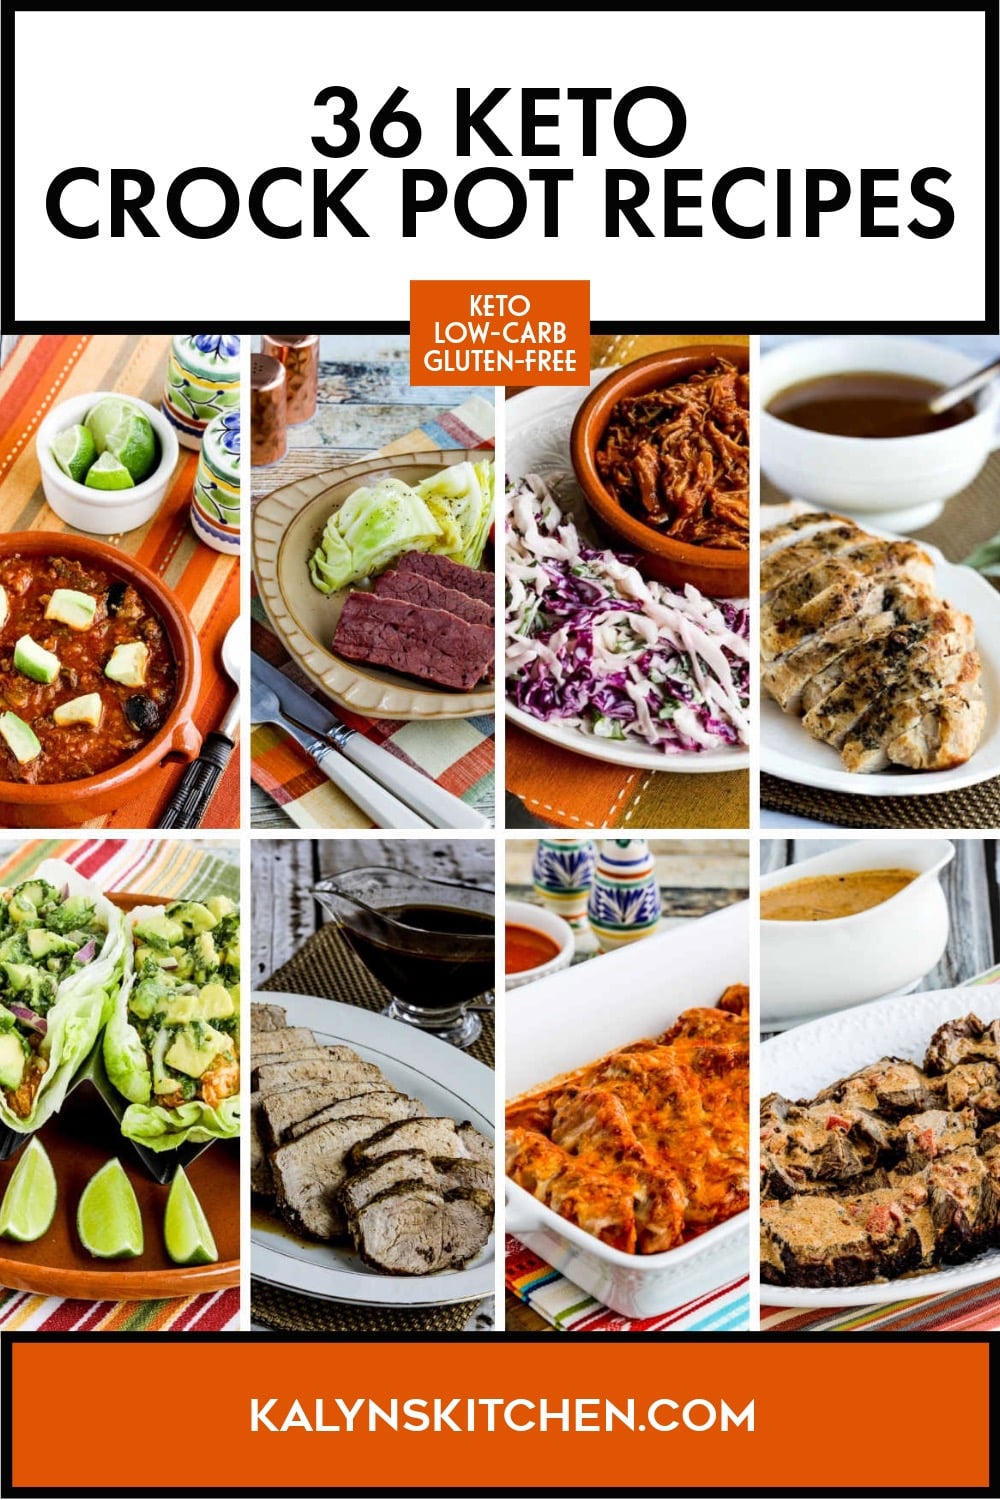 Pinterest image of 36 Keto Crock Pot Recipes